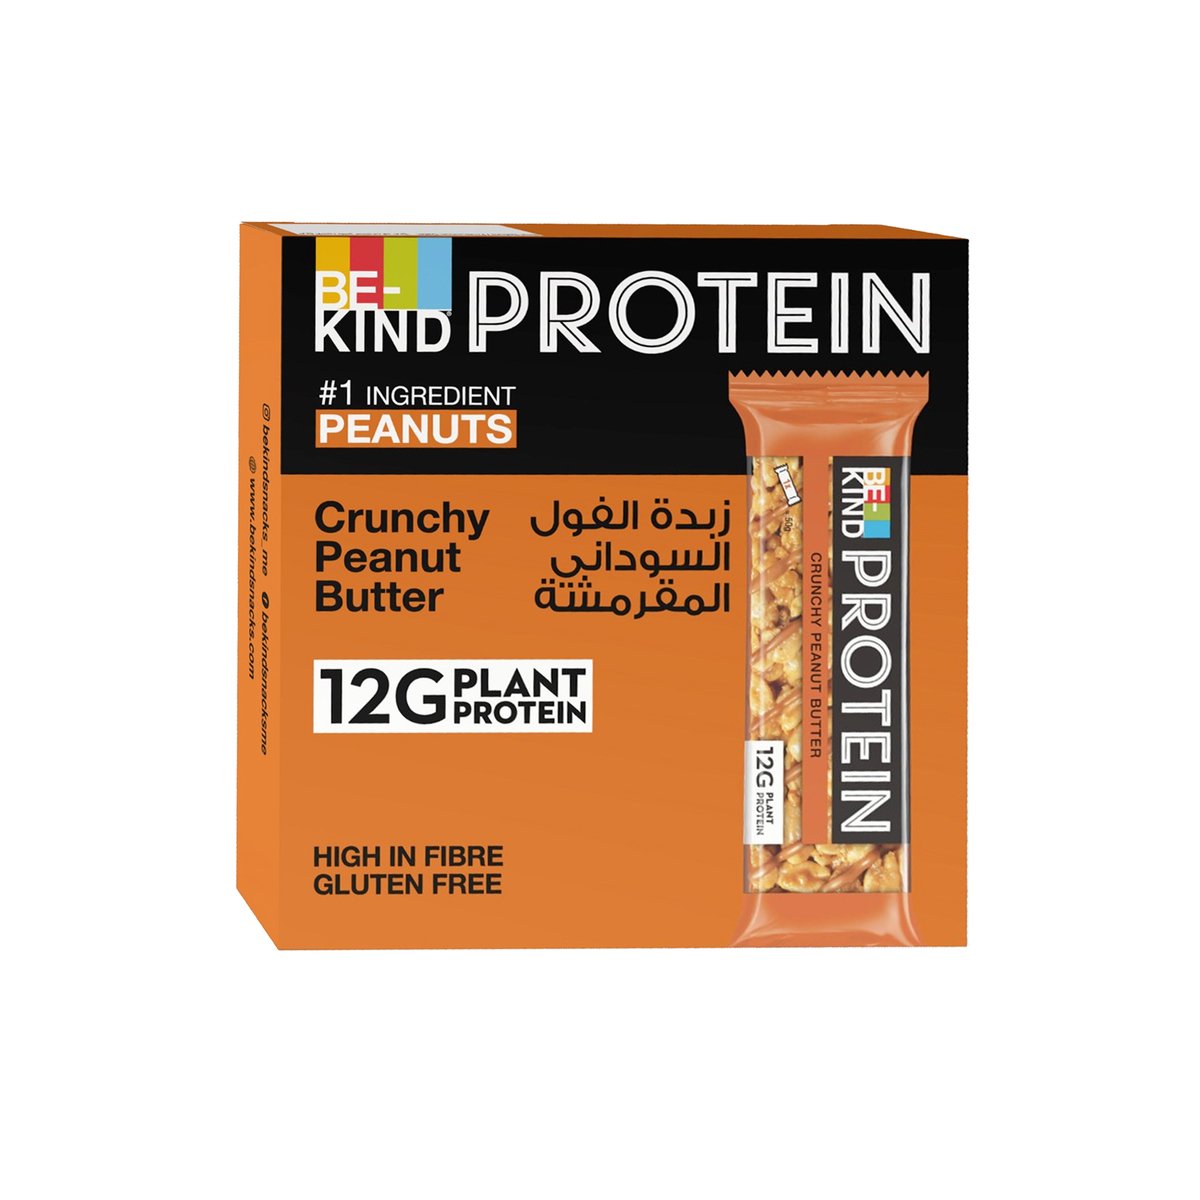 Be Kind Protein Crunchy Peanut Butter Bar 3 x 50g